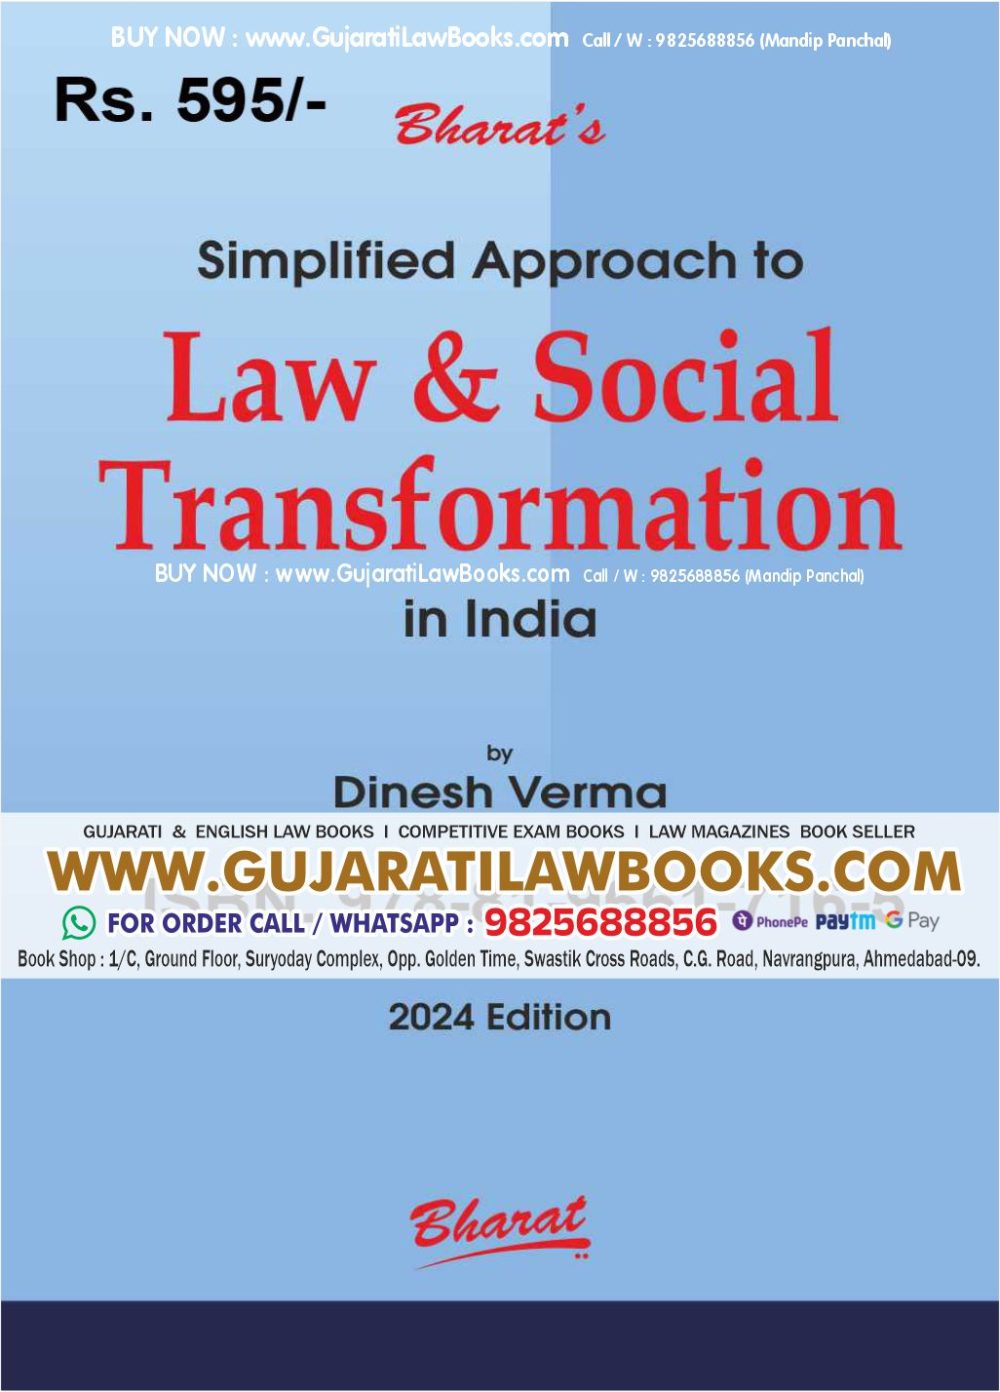 Law & Social Transformation in India - 2024 Edition Bharat